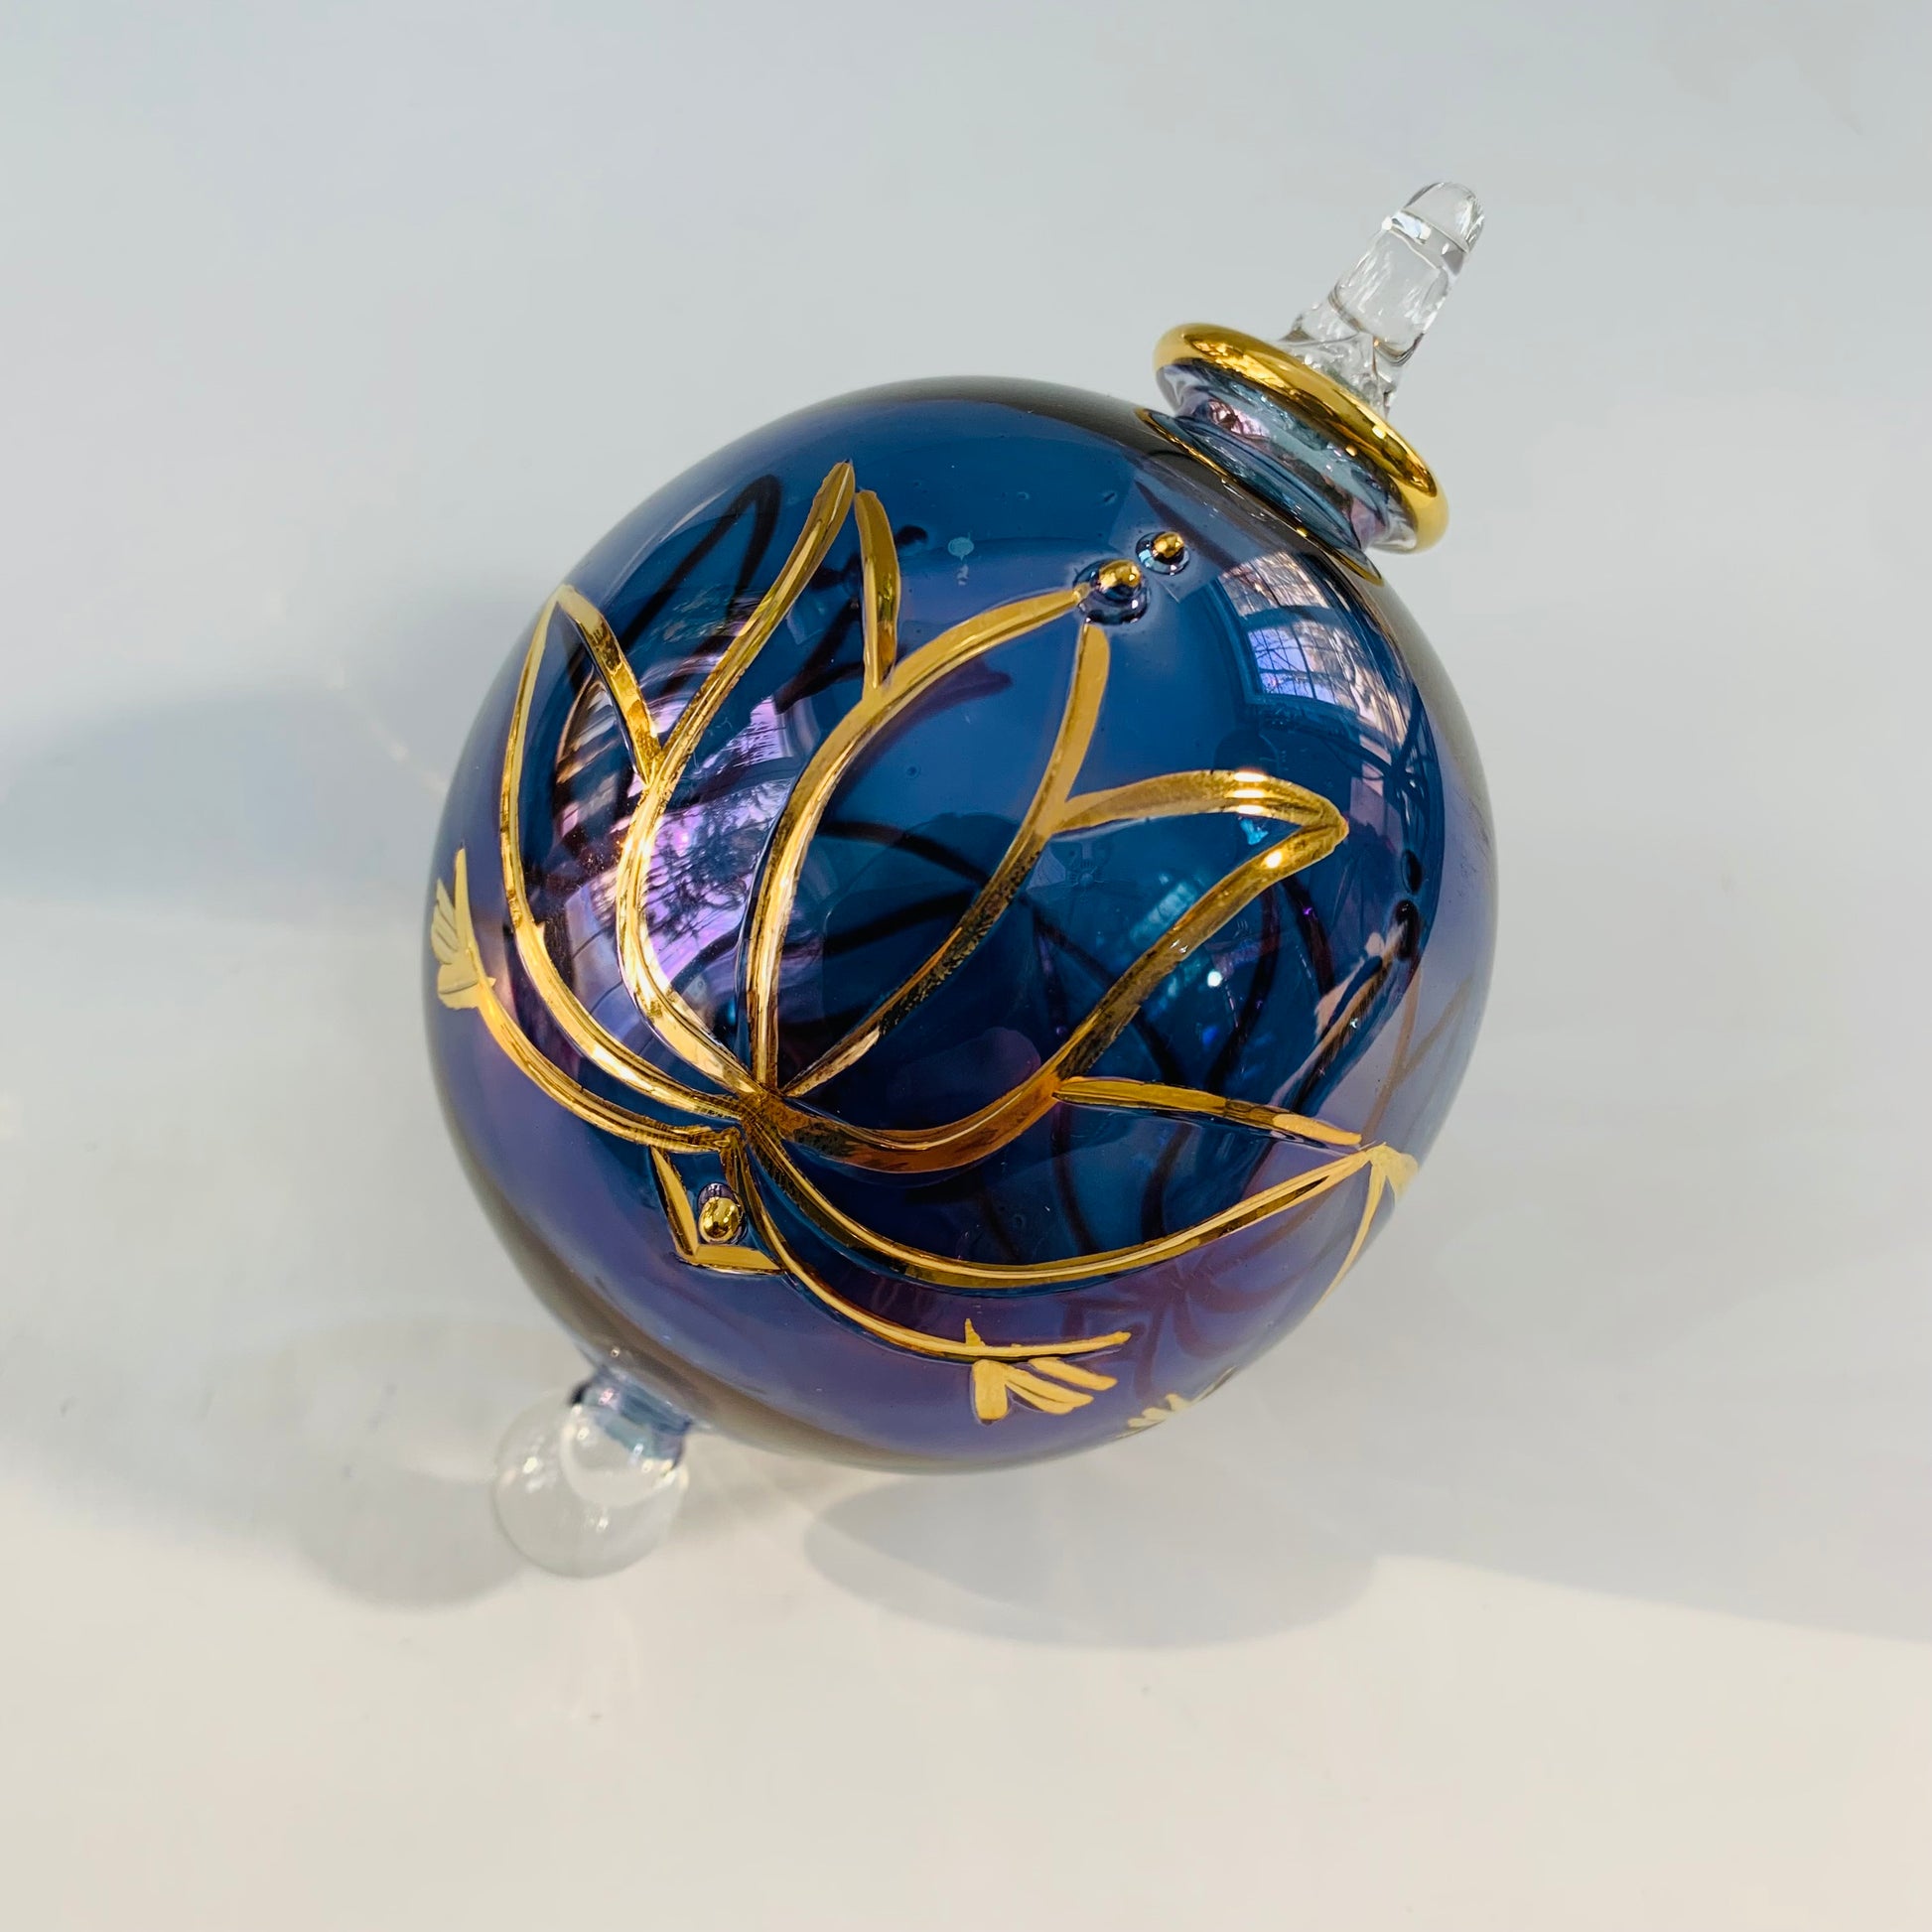 Blown Glass Ornament - Colored Lotus